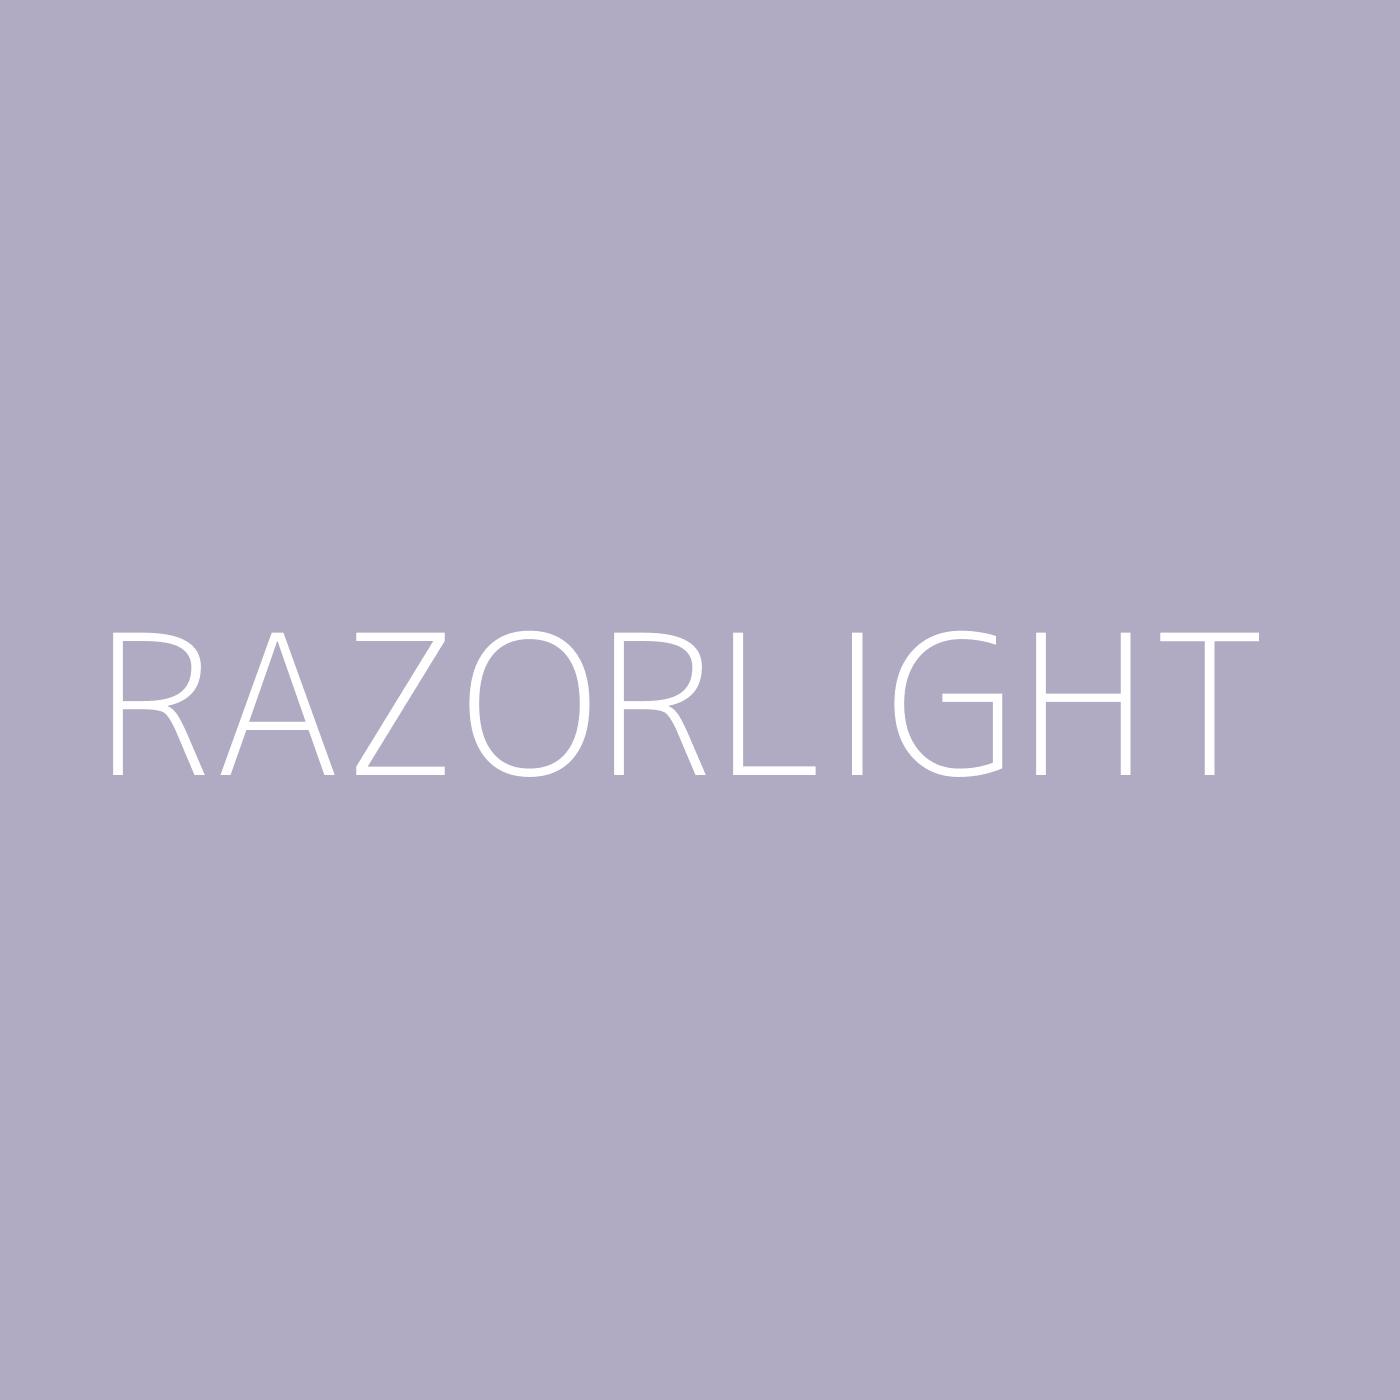 Razorlight Playlist Artwork